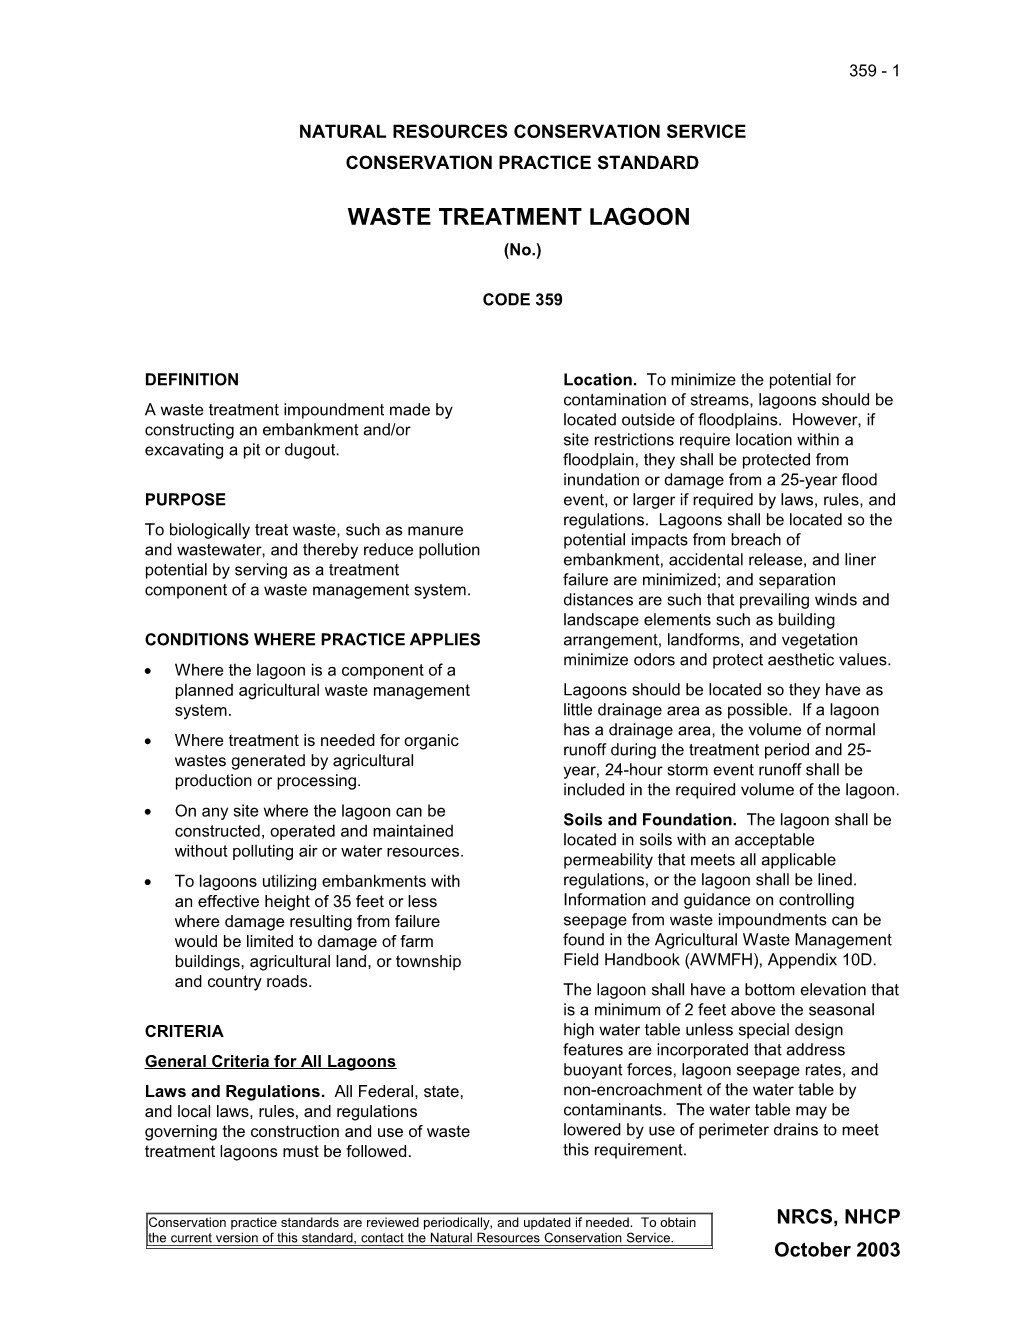 Waste Treatment Lagoon 359